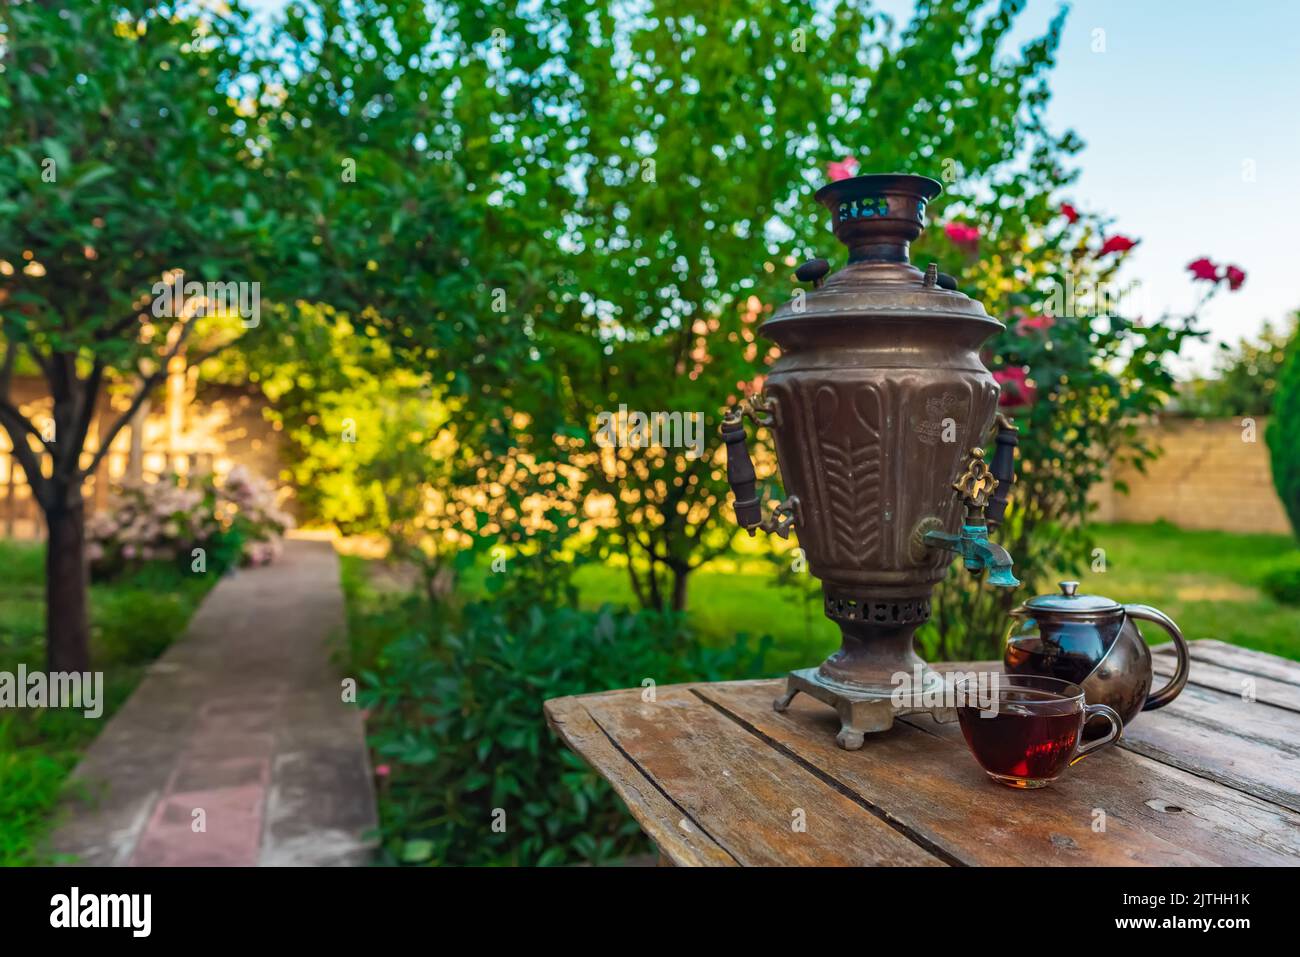 Tea drinking from a vintage samovar in garden Stock Photo